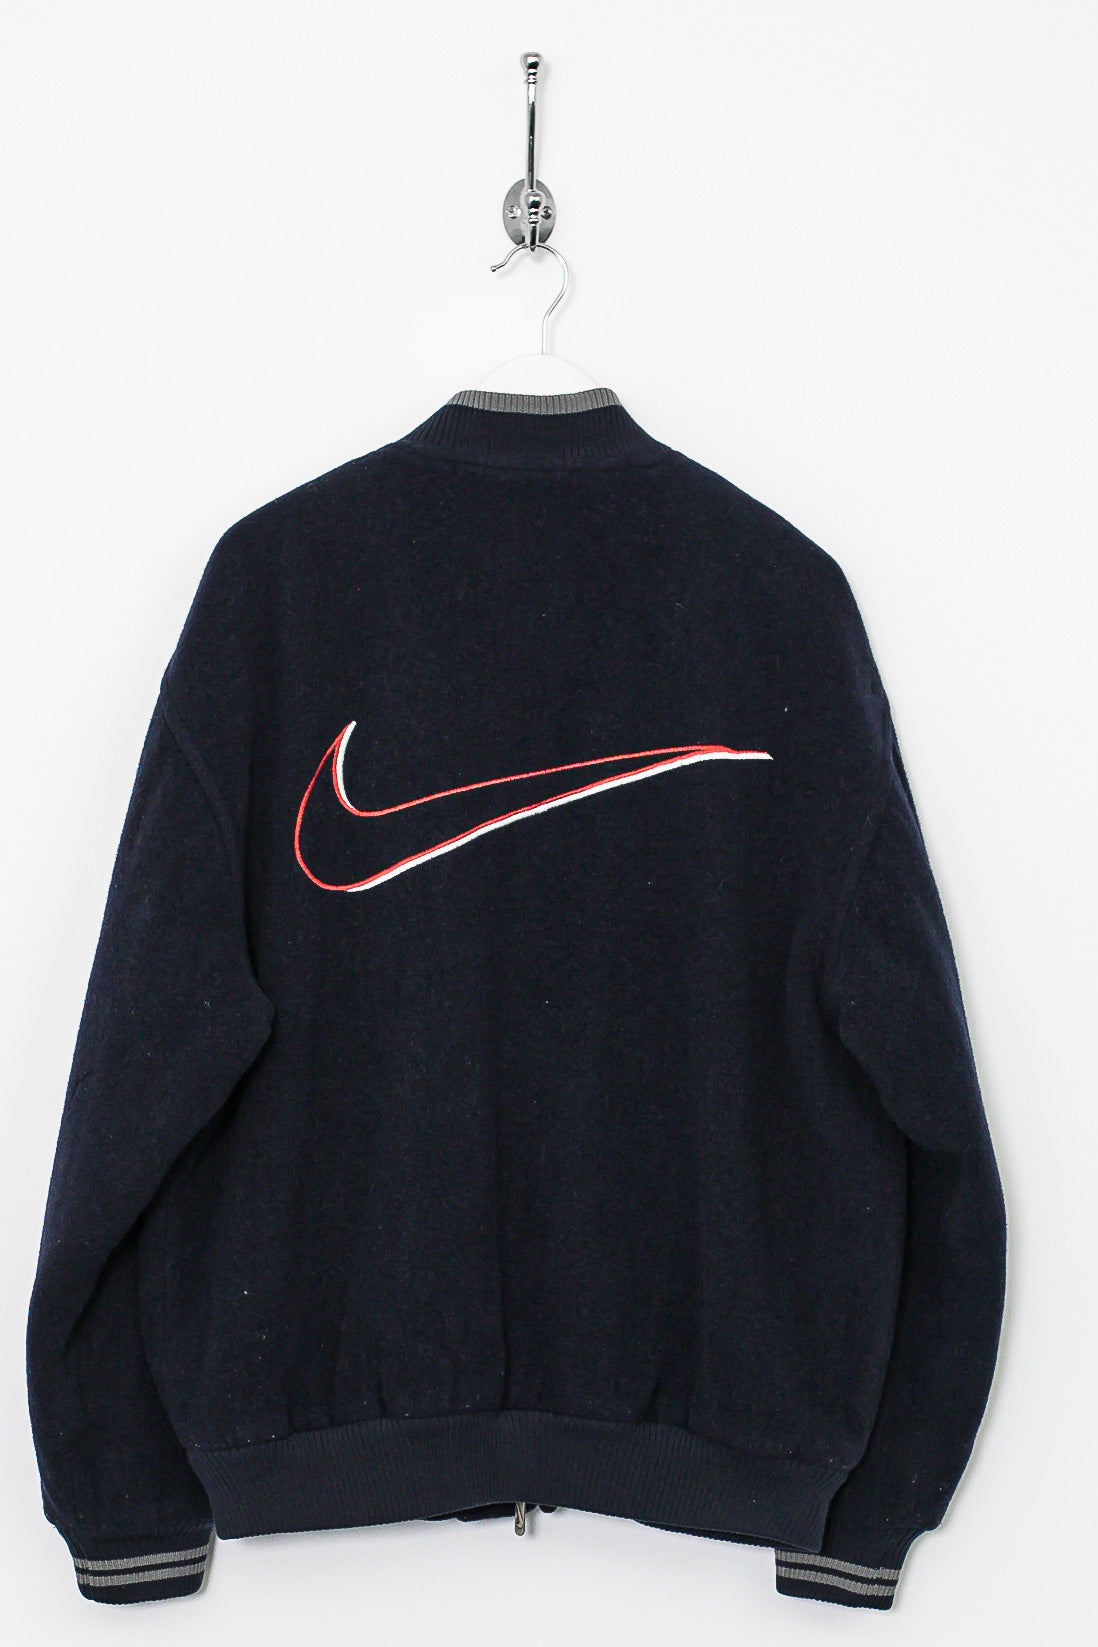 90s Nike Wool Varsity Jacket (M)